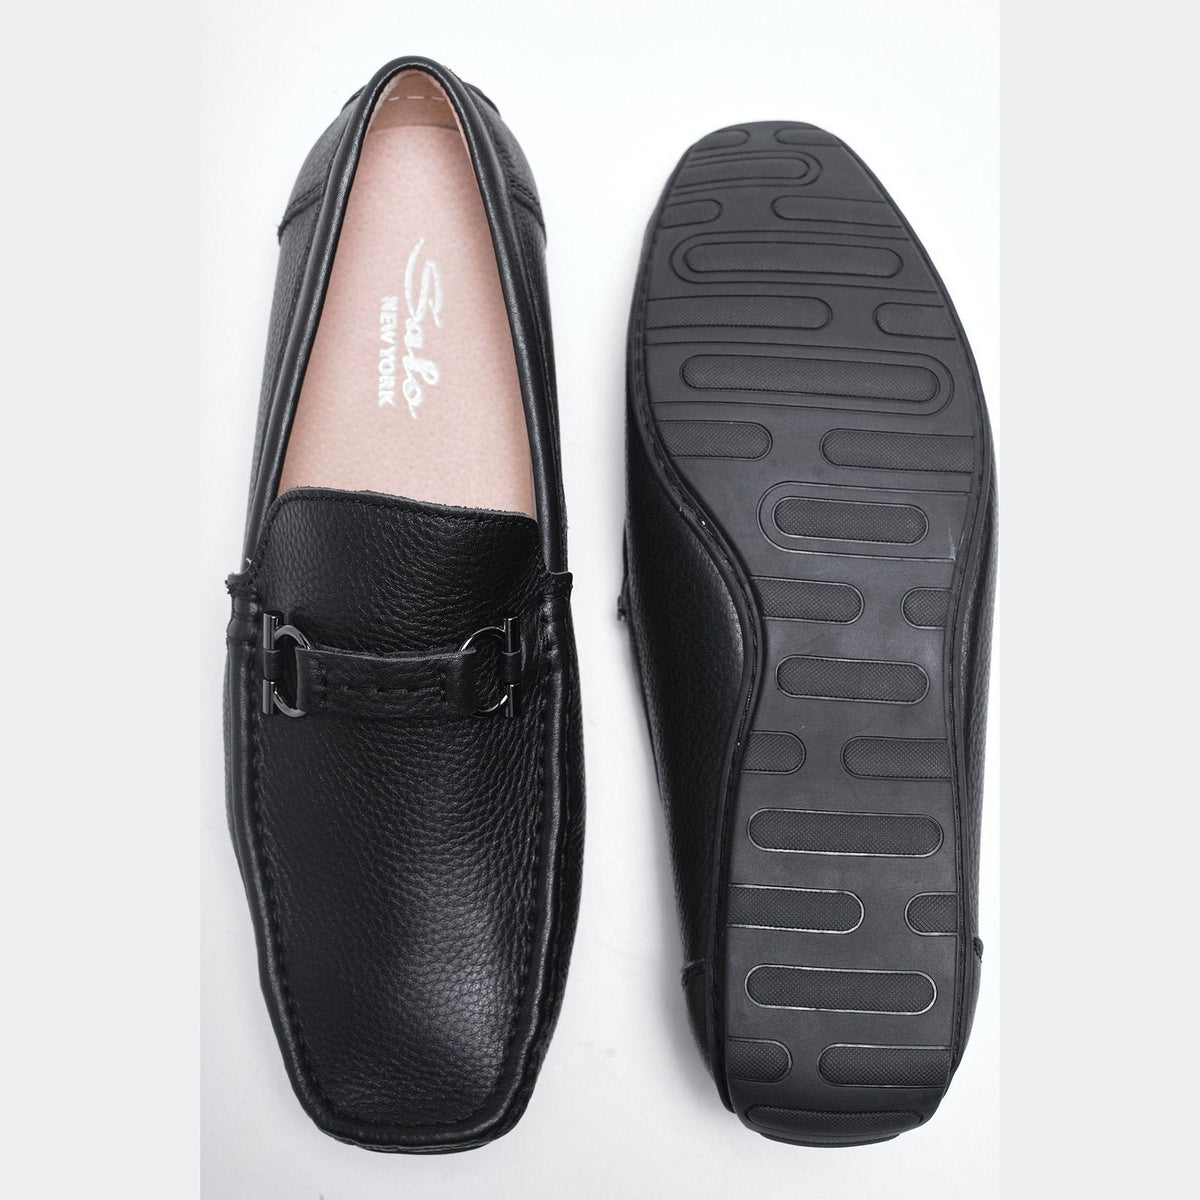 Salo NY Mens Black Slip-on Loafer Dress Shoe - The Suit Depot